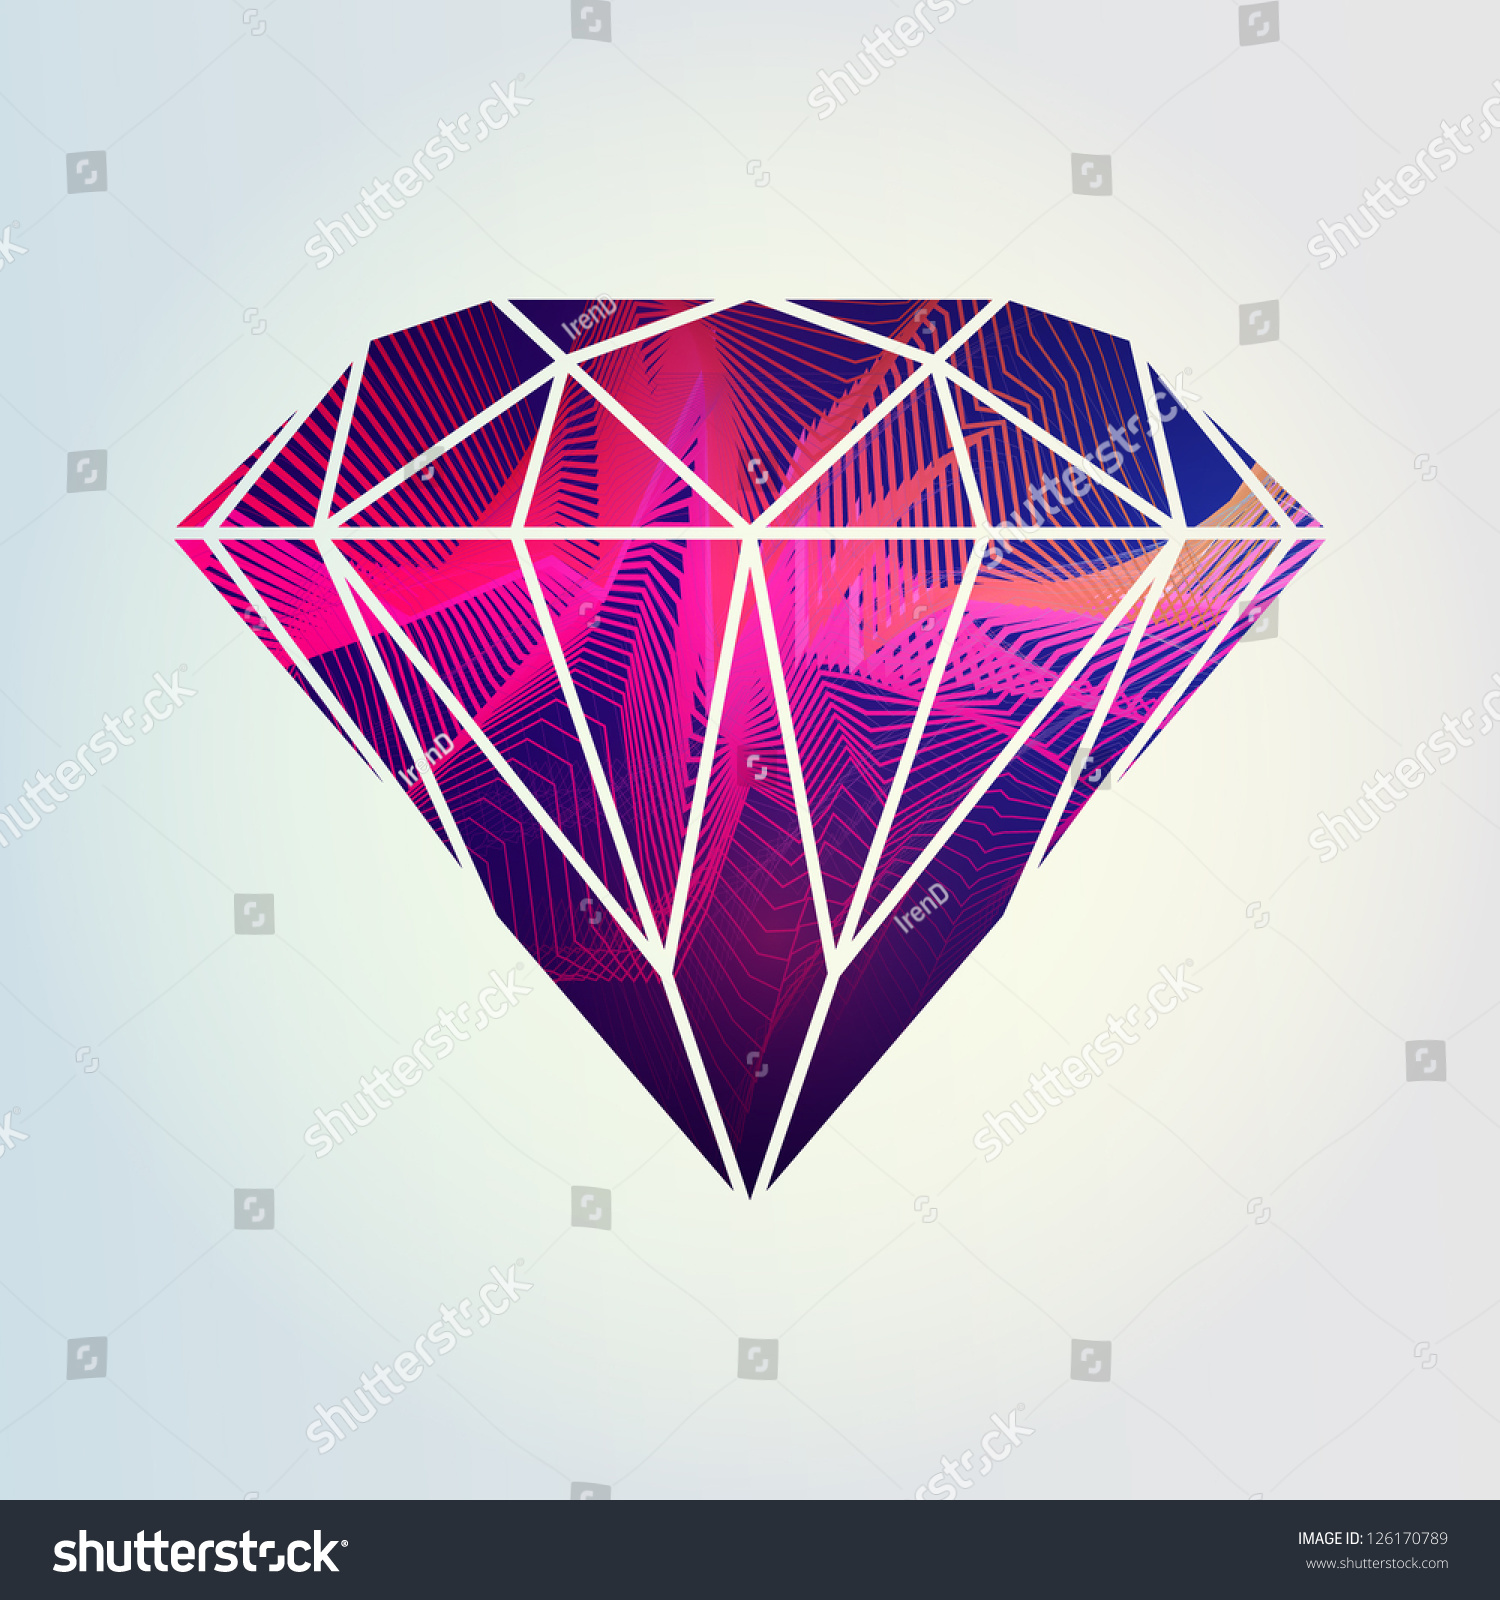 Diamond Photo Design 1